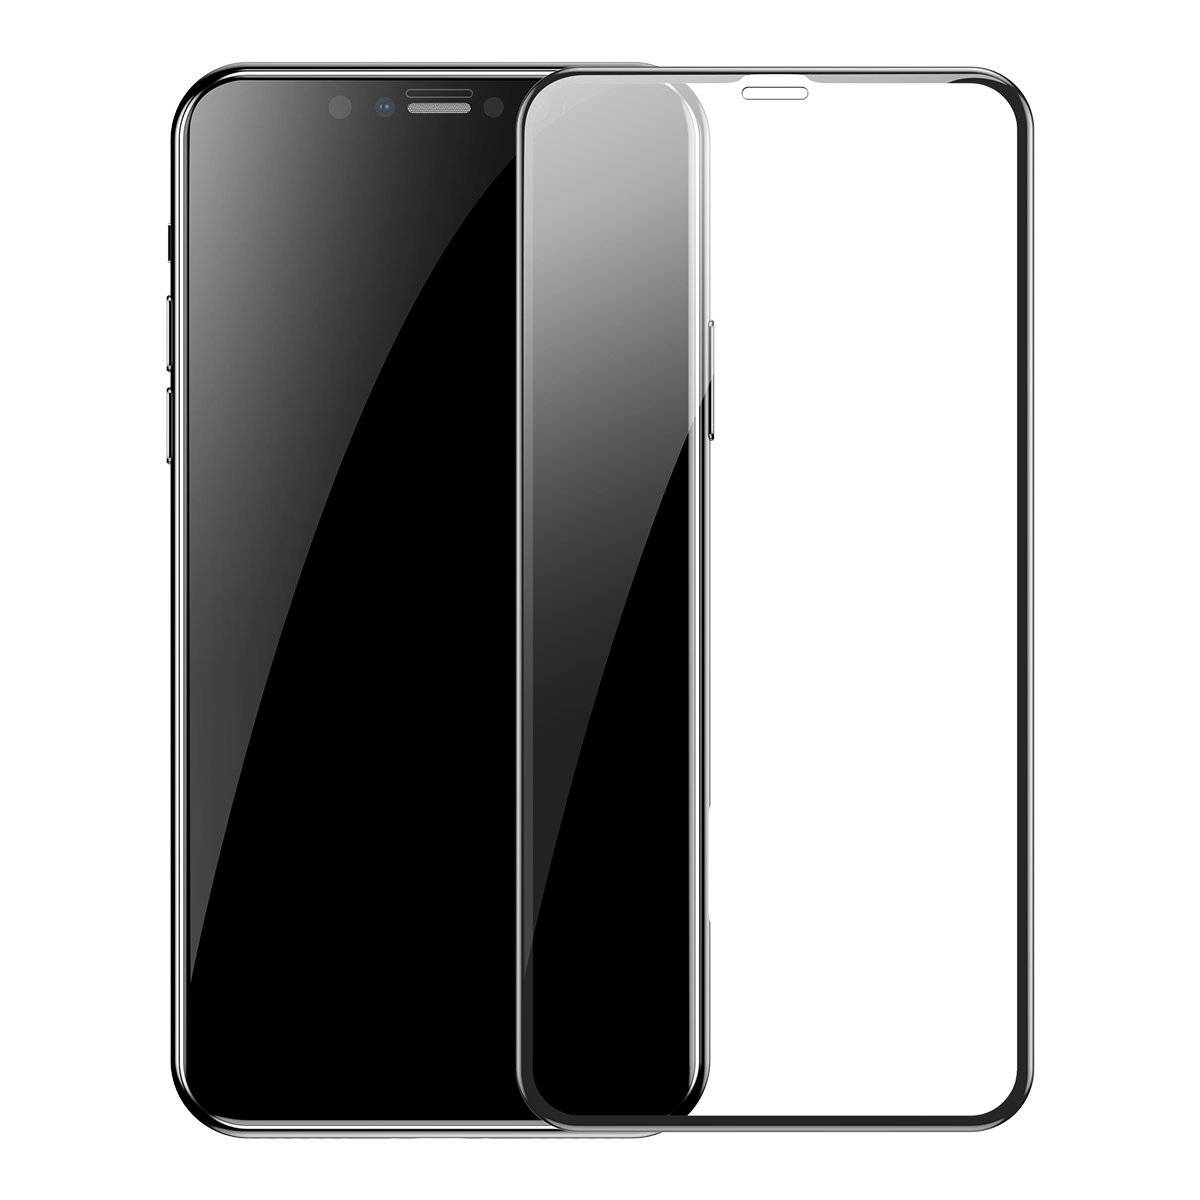 Set 2 folii de sticla pentru protectie ecran, Apple iPhone XS Max / 11 Pro Max, Baseus Tempered Glass, 6.5 inch 6.5 imagine Black Friday 2021